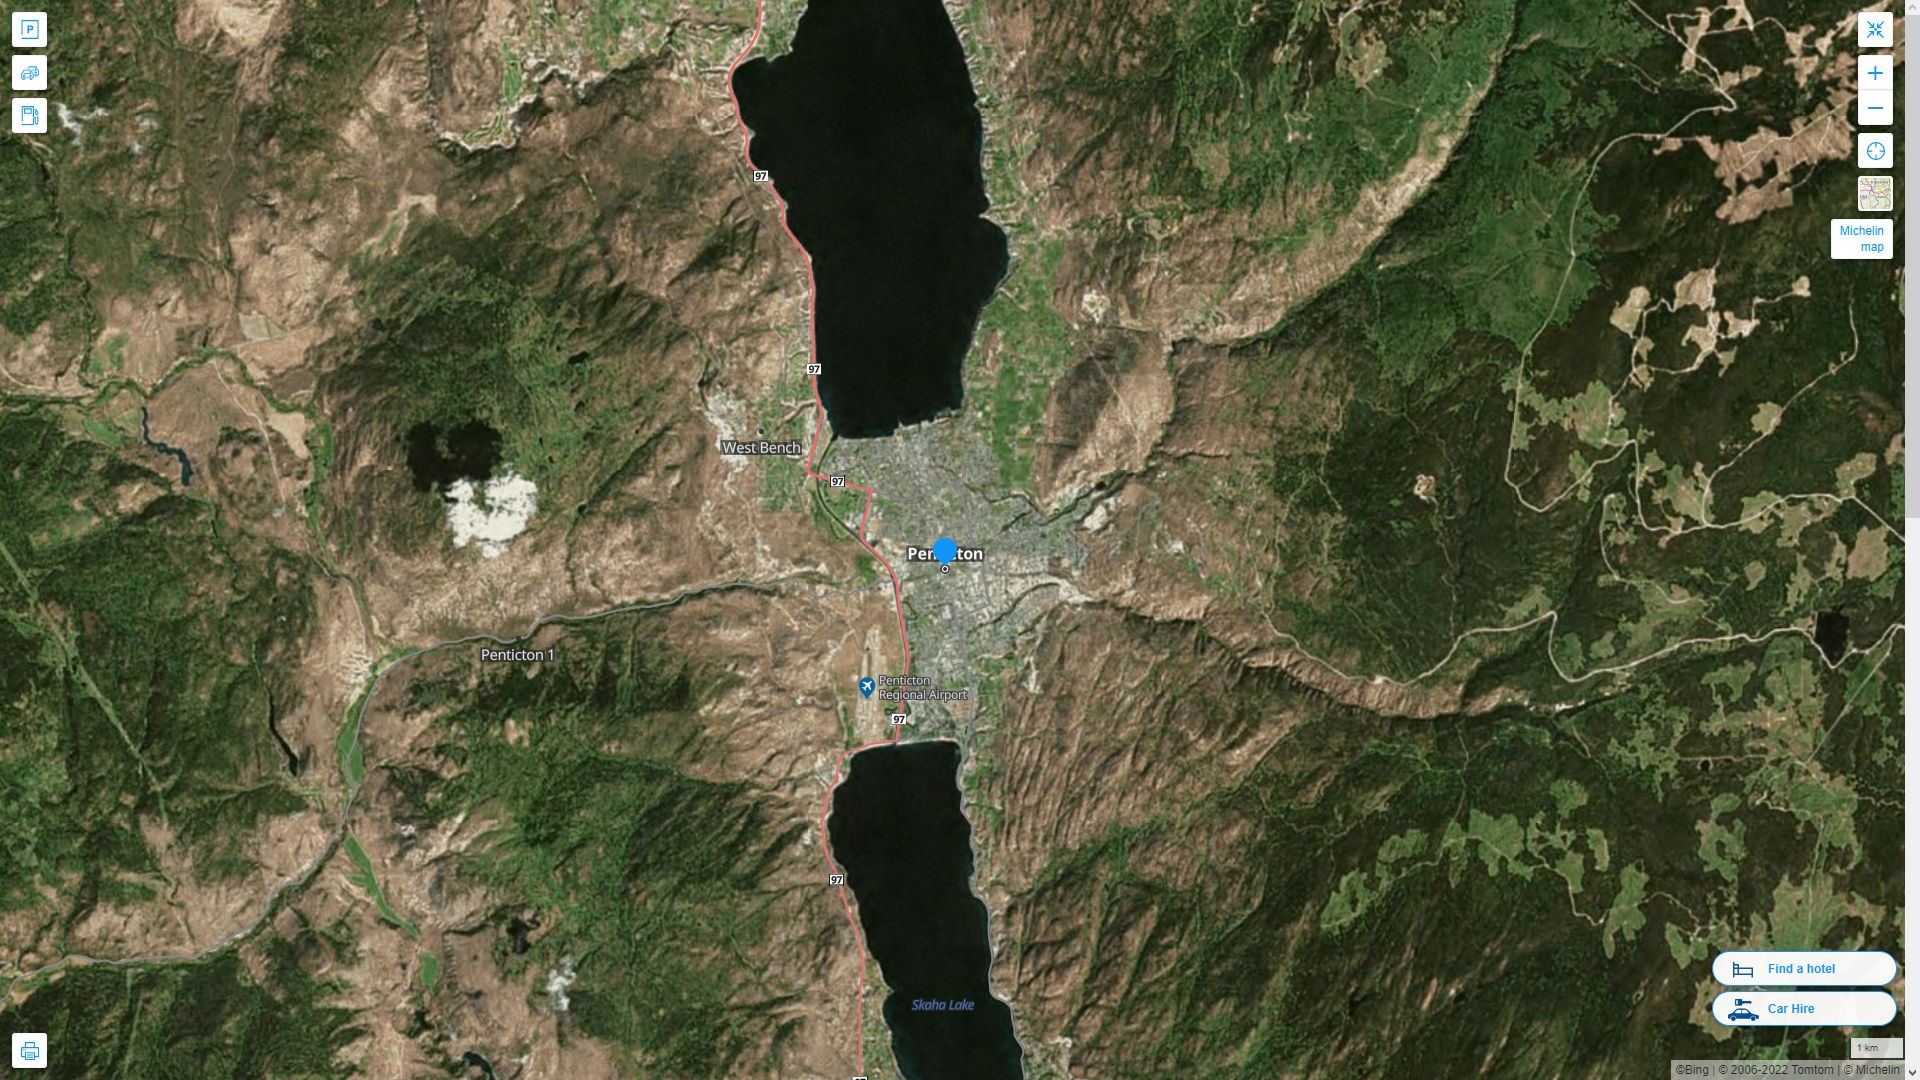 Penticton Canada Autoroute et carte routiere avec vue satellite